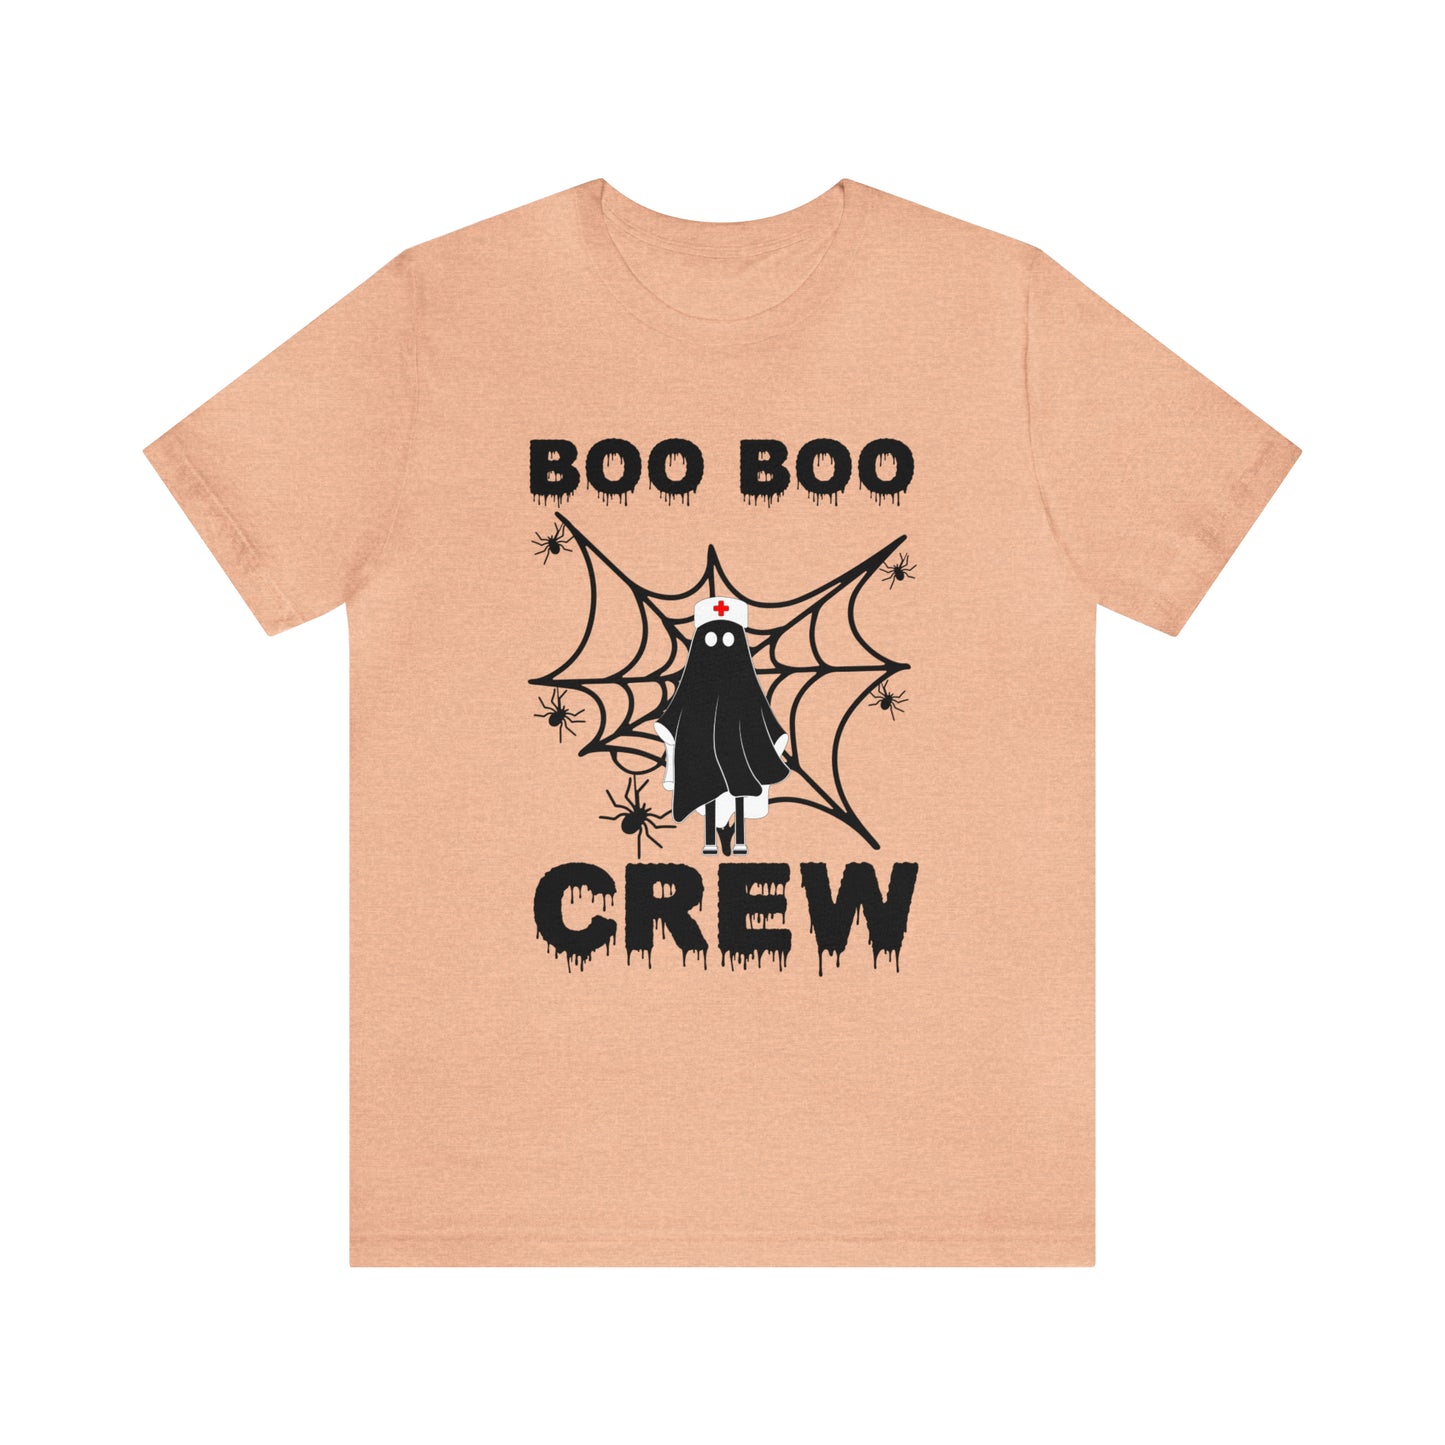 Boo Boo Crew Shirt, Cute Halloween Gift, Ghost Lover Shirt, Ghost Halloween Shirt, Spooky Shirt, Halloween Shirt, T759